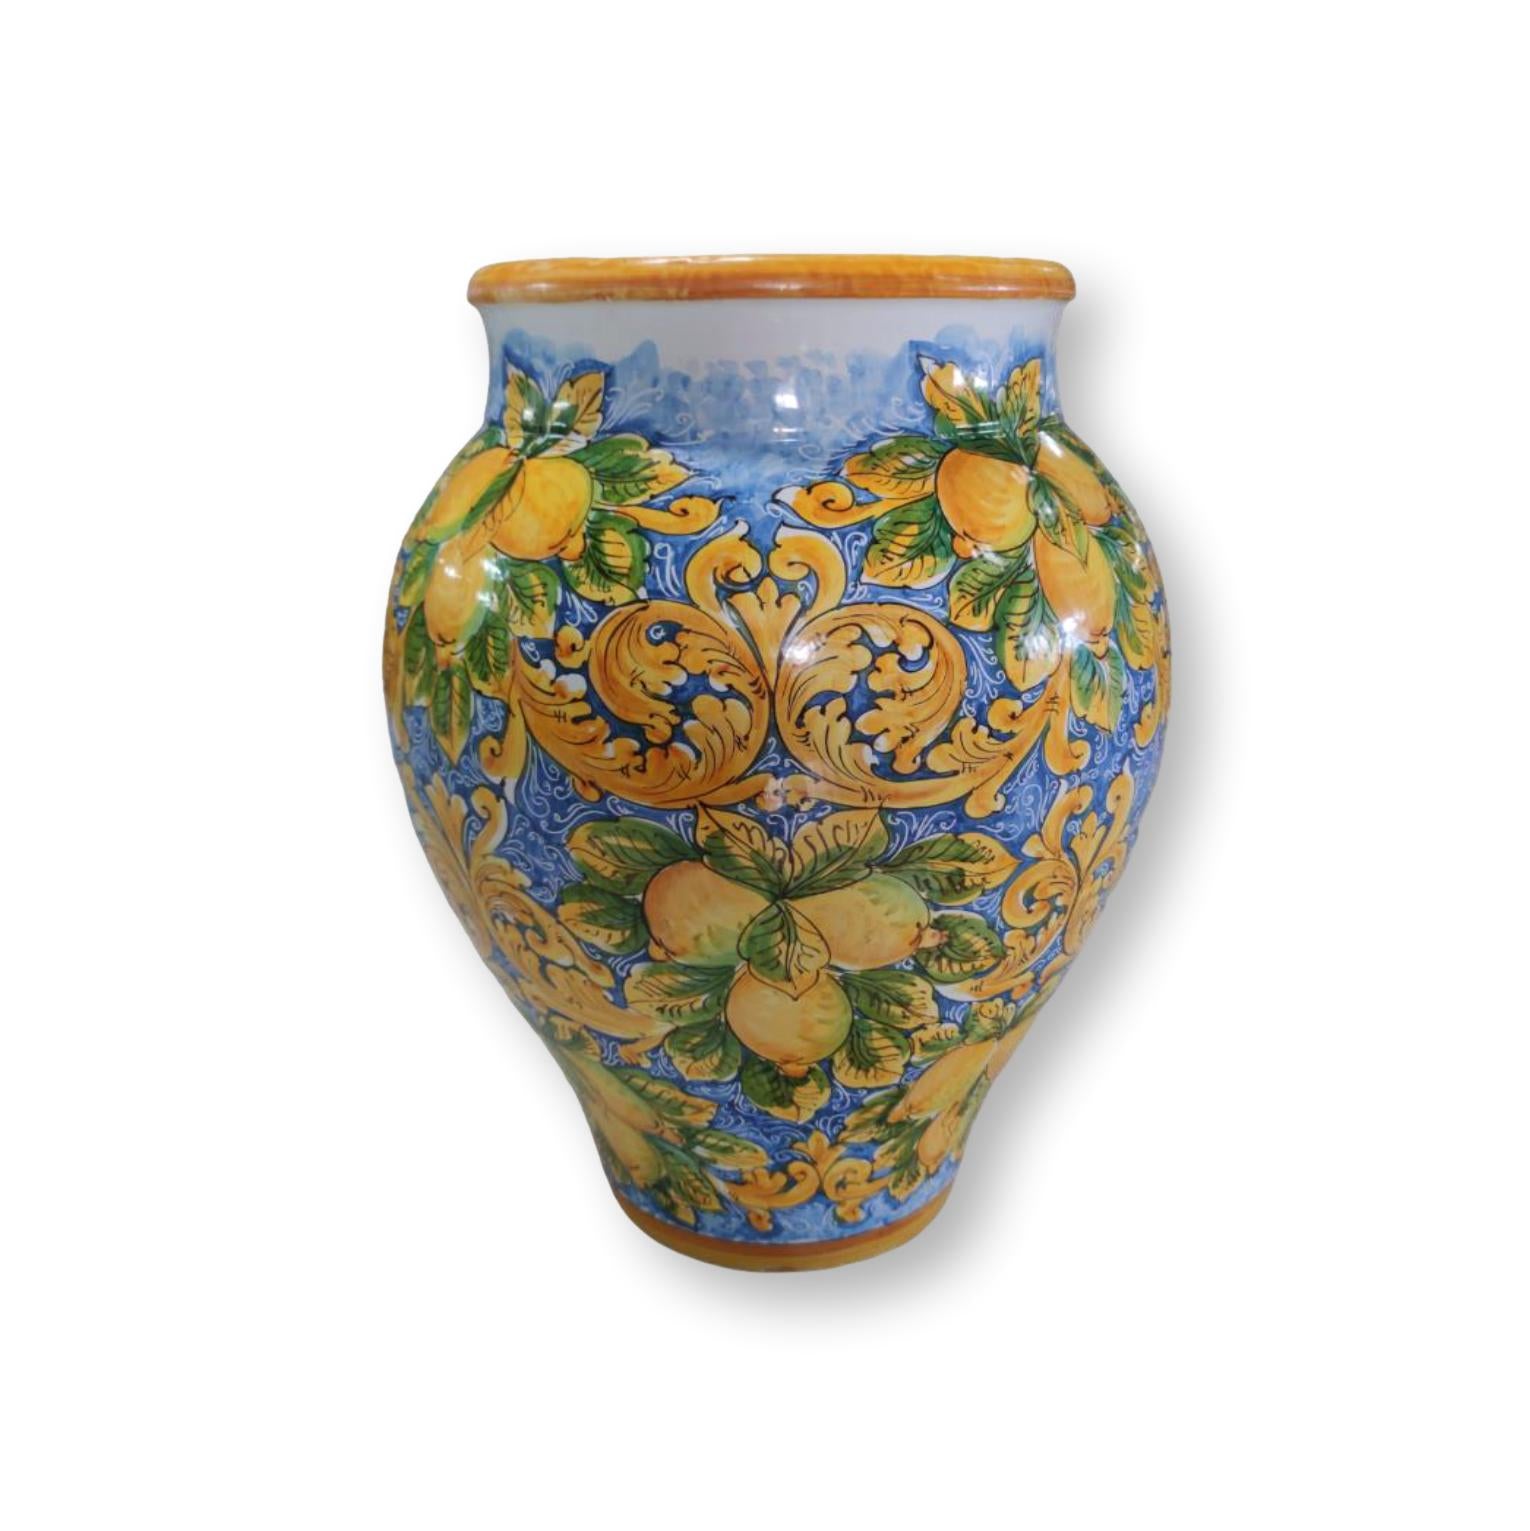 Giara in ceramica dipinta a mano - Ornata Giallo e Azzurro con Limoni